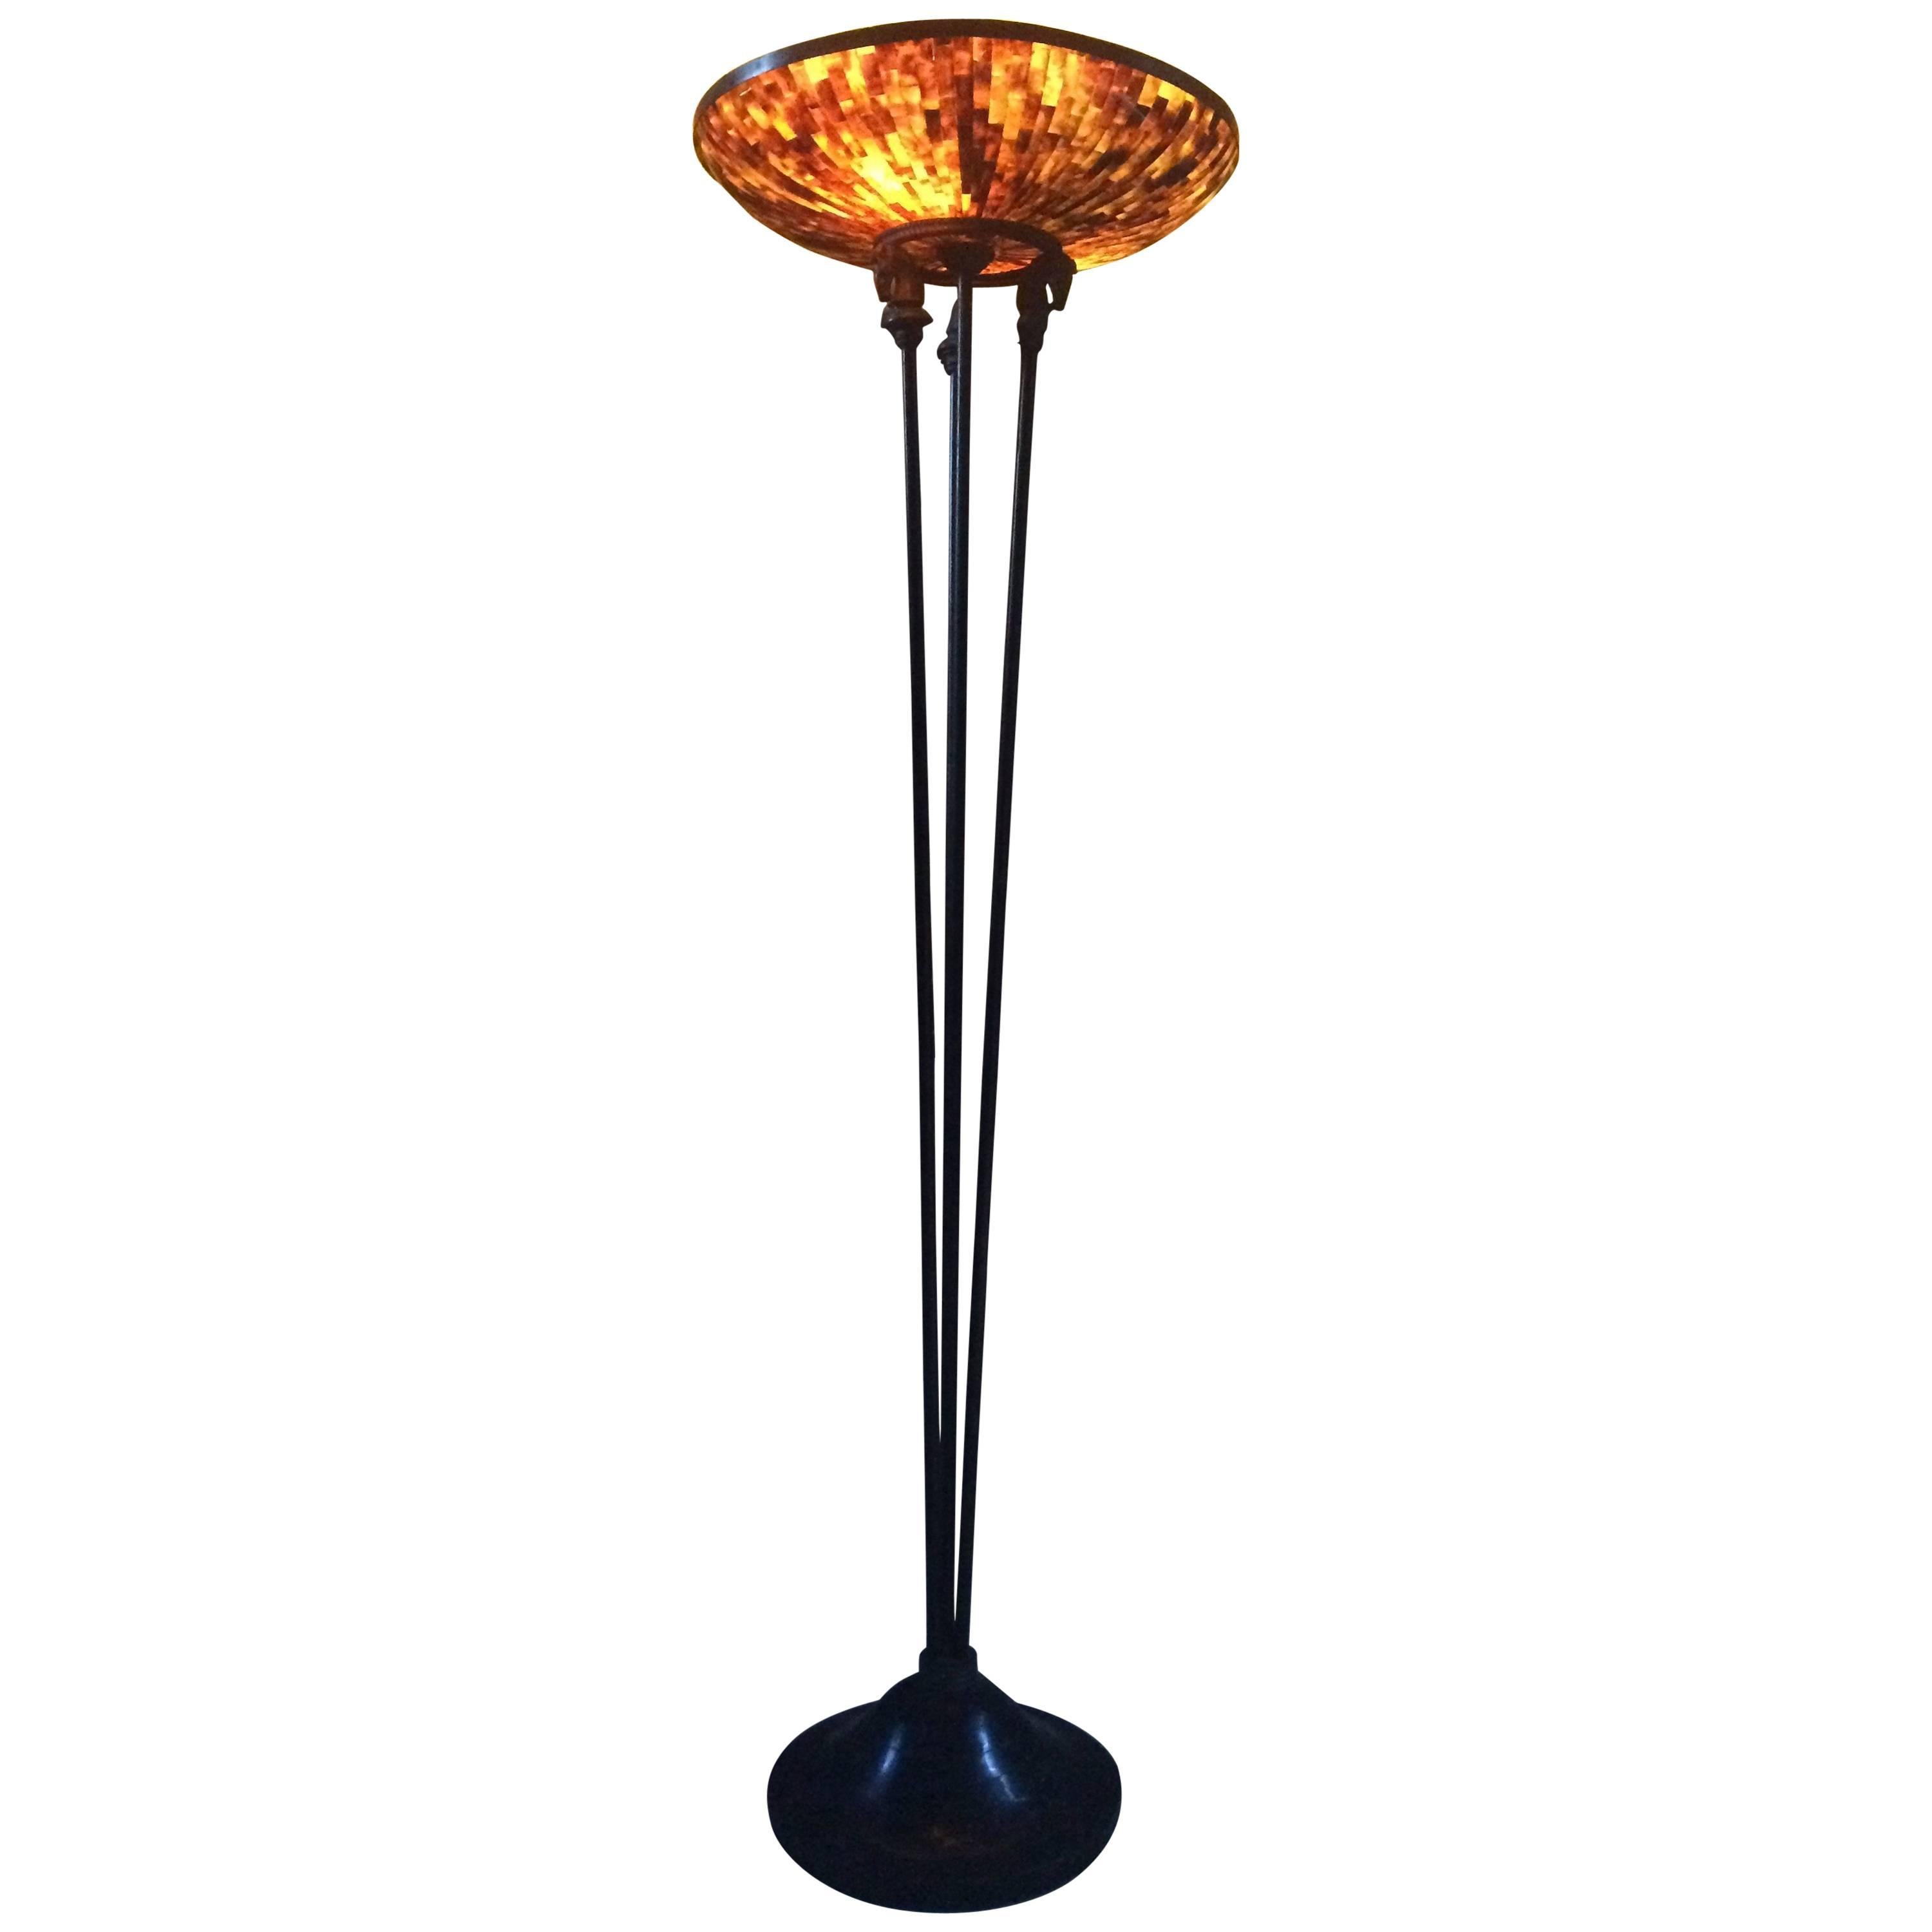 Tall Art Deco Style Brass Floor Standing Uplighter Lamp Standard Light